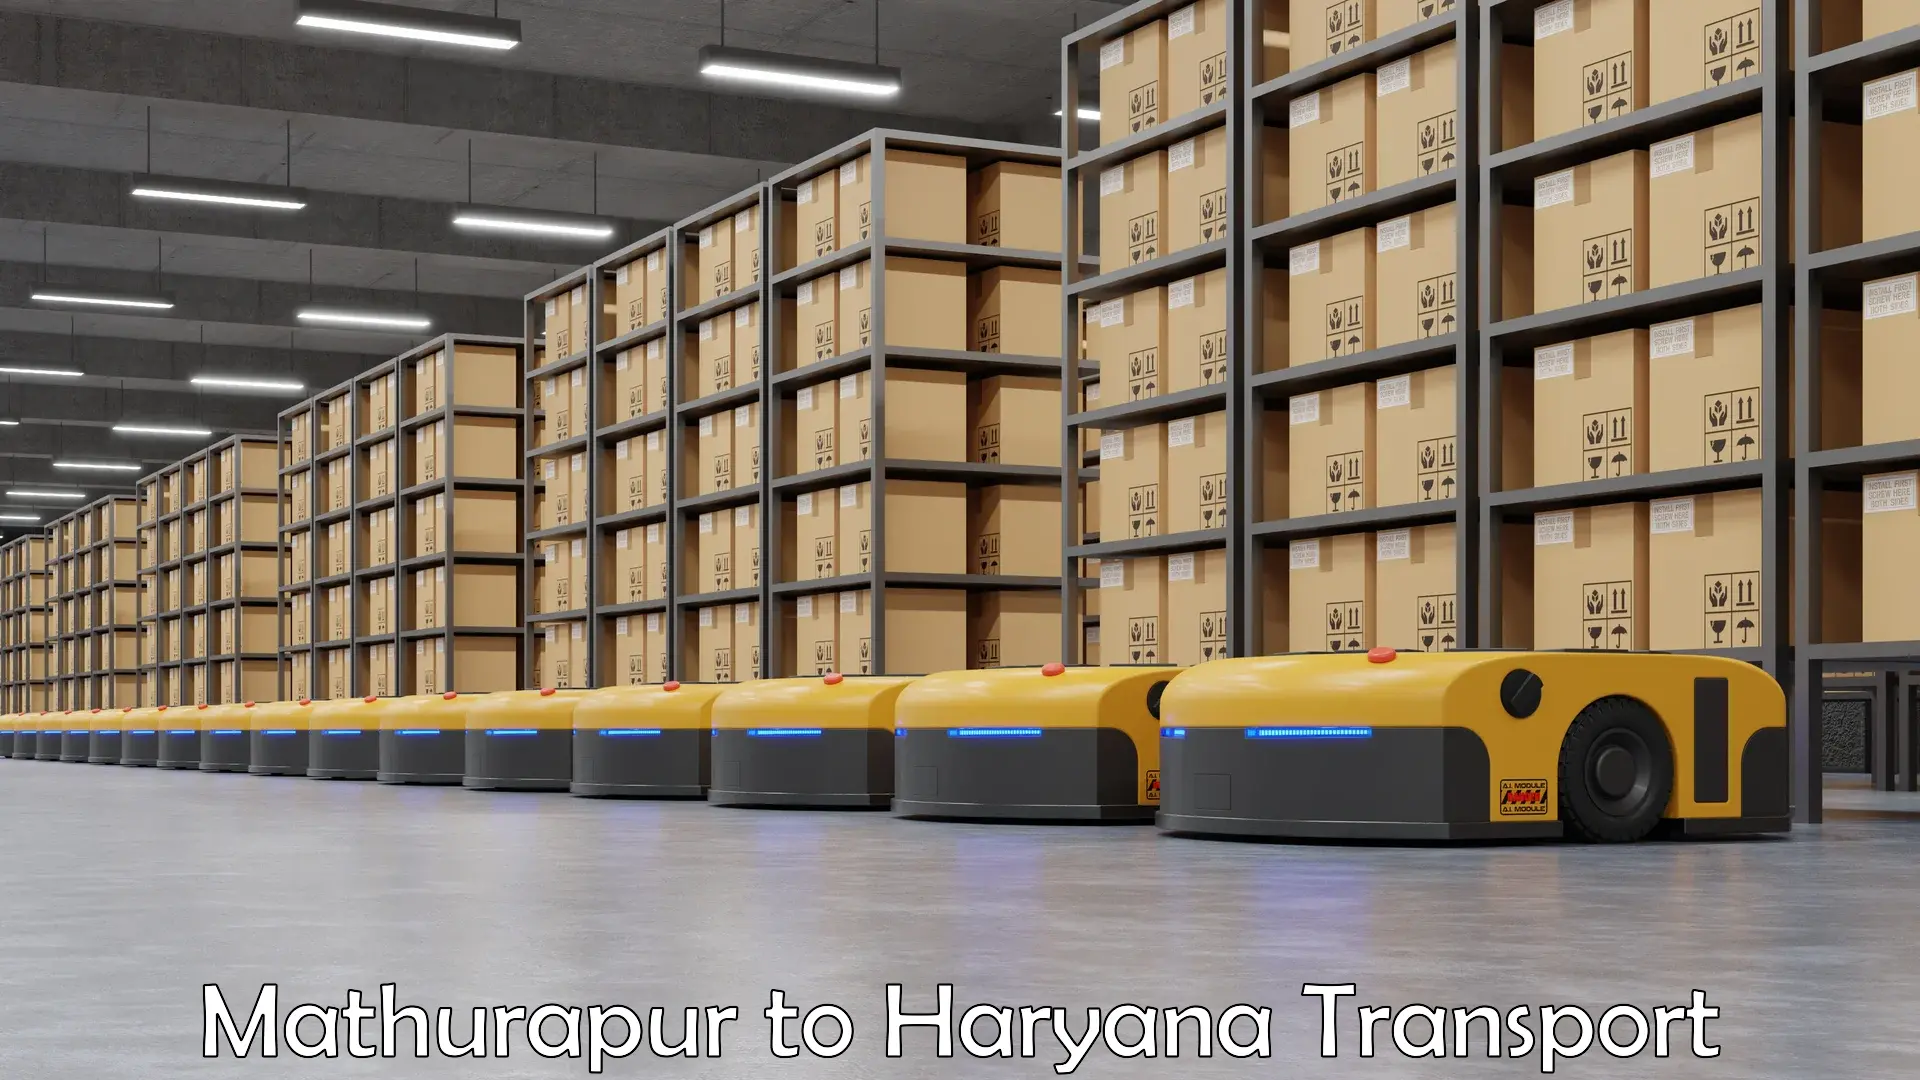 Truck transport companies in India Mathurapur to Hansi